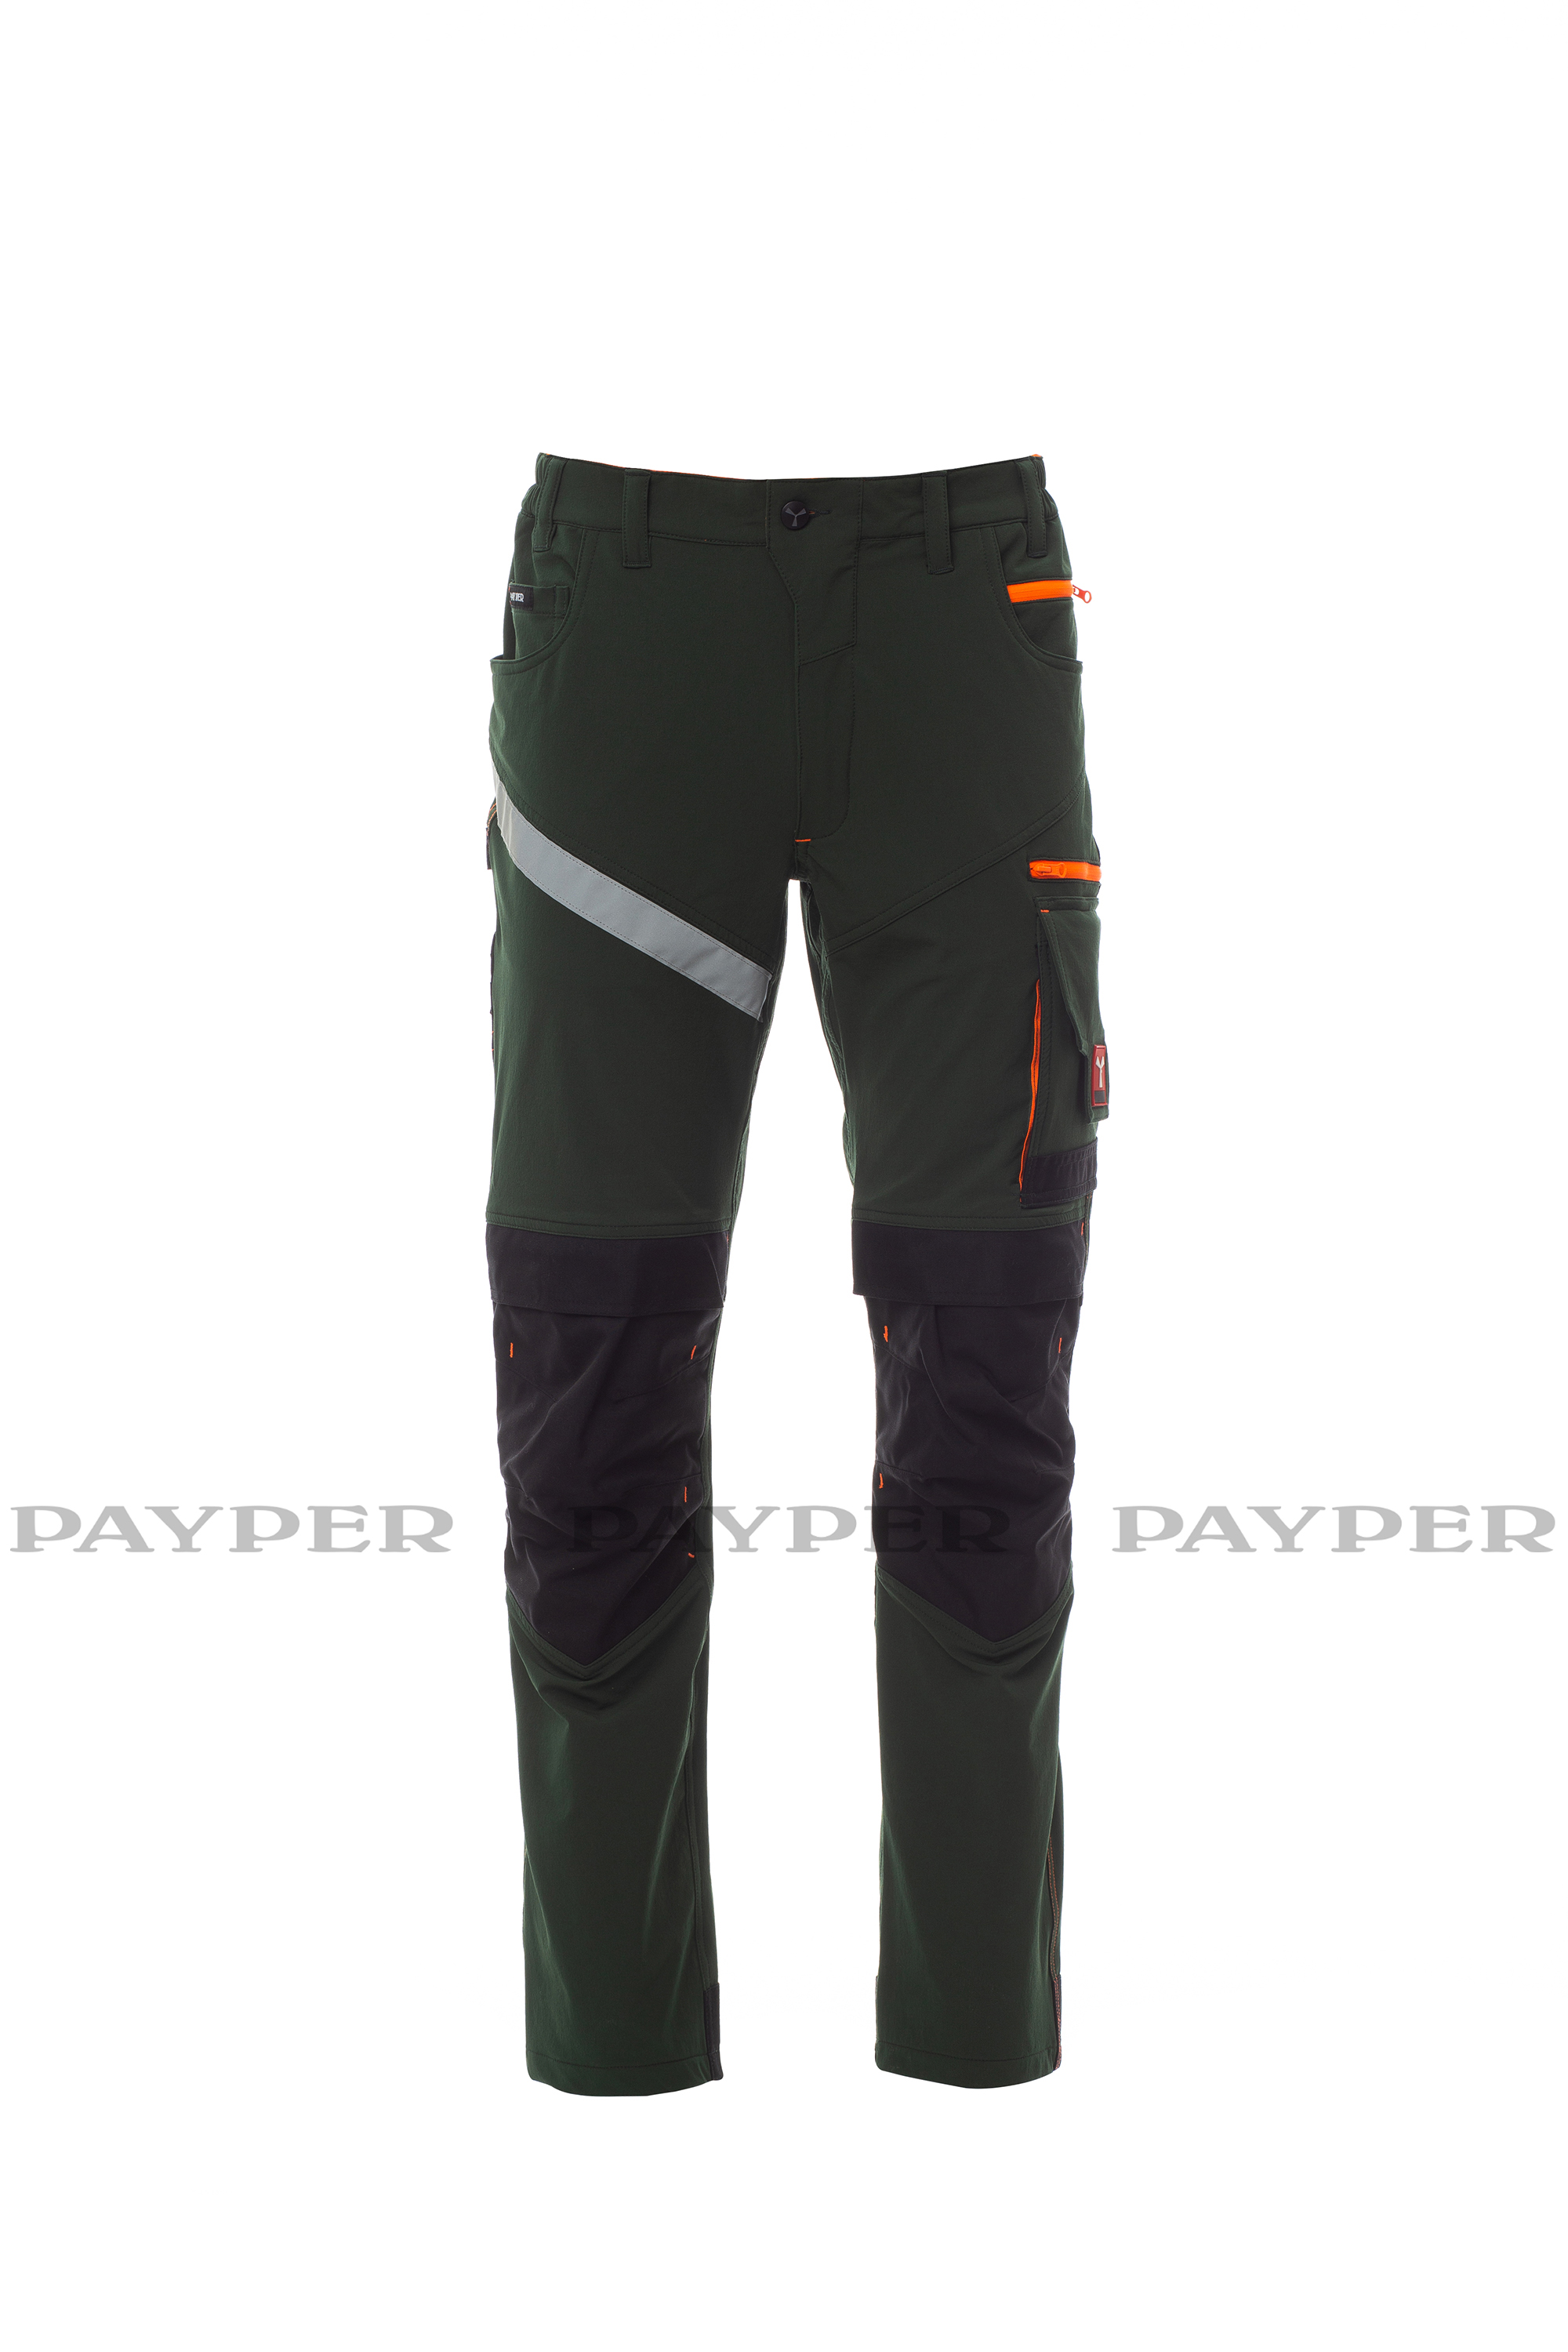 Kalhoty NEXT 4W Payper zelené Velikost: 58